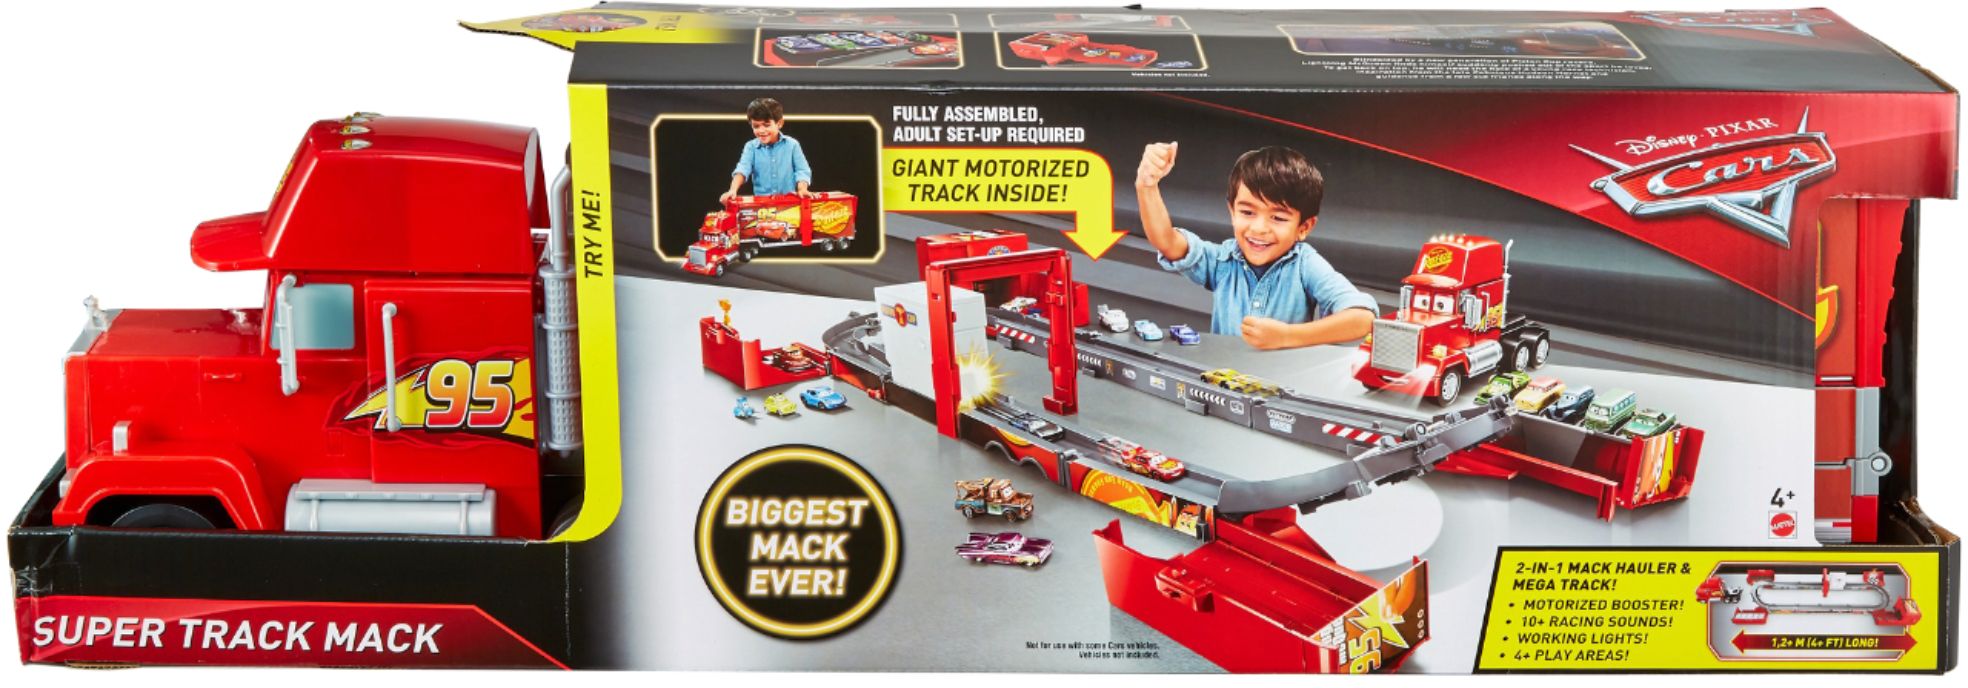 Best Buy: Disney Pixar Cars Super Track Mack Playset Red FPK72